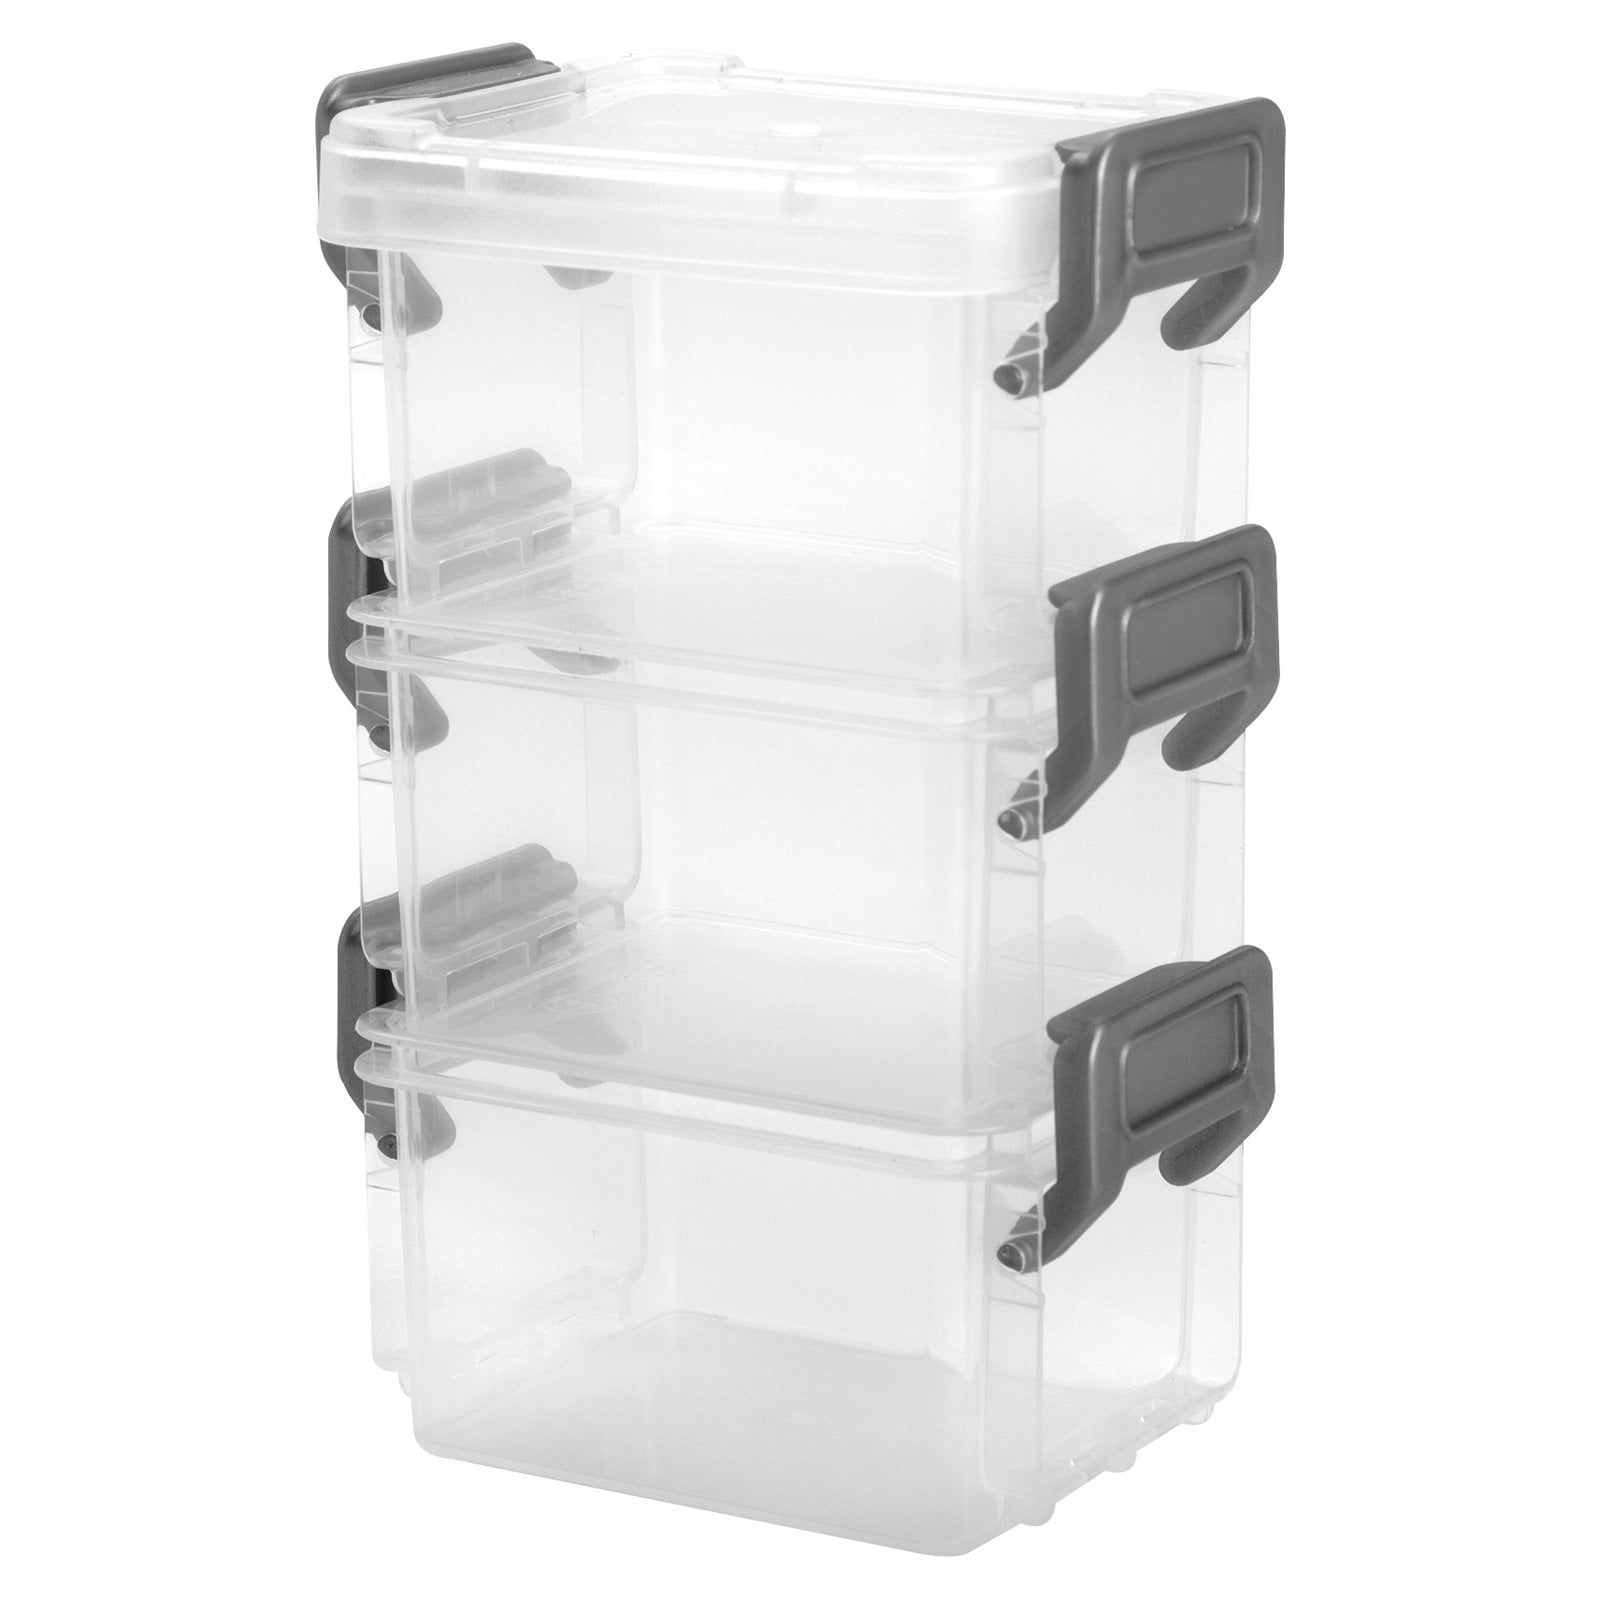 IRIS Plastic Storage Container With Handles/Latch Lid, 22 x 16 1